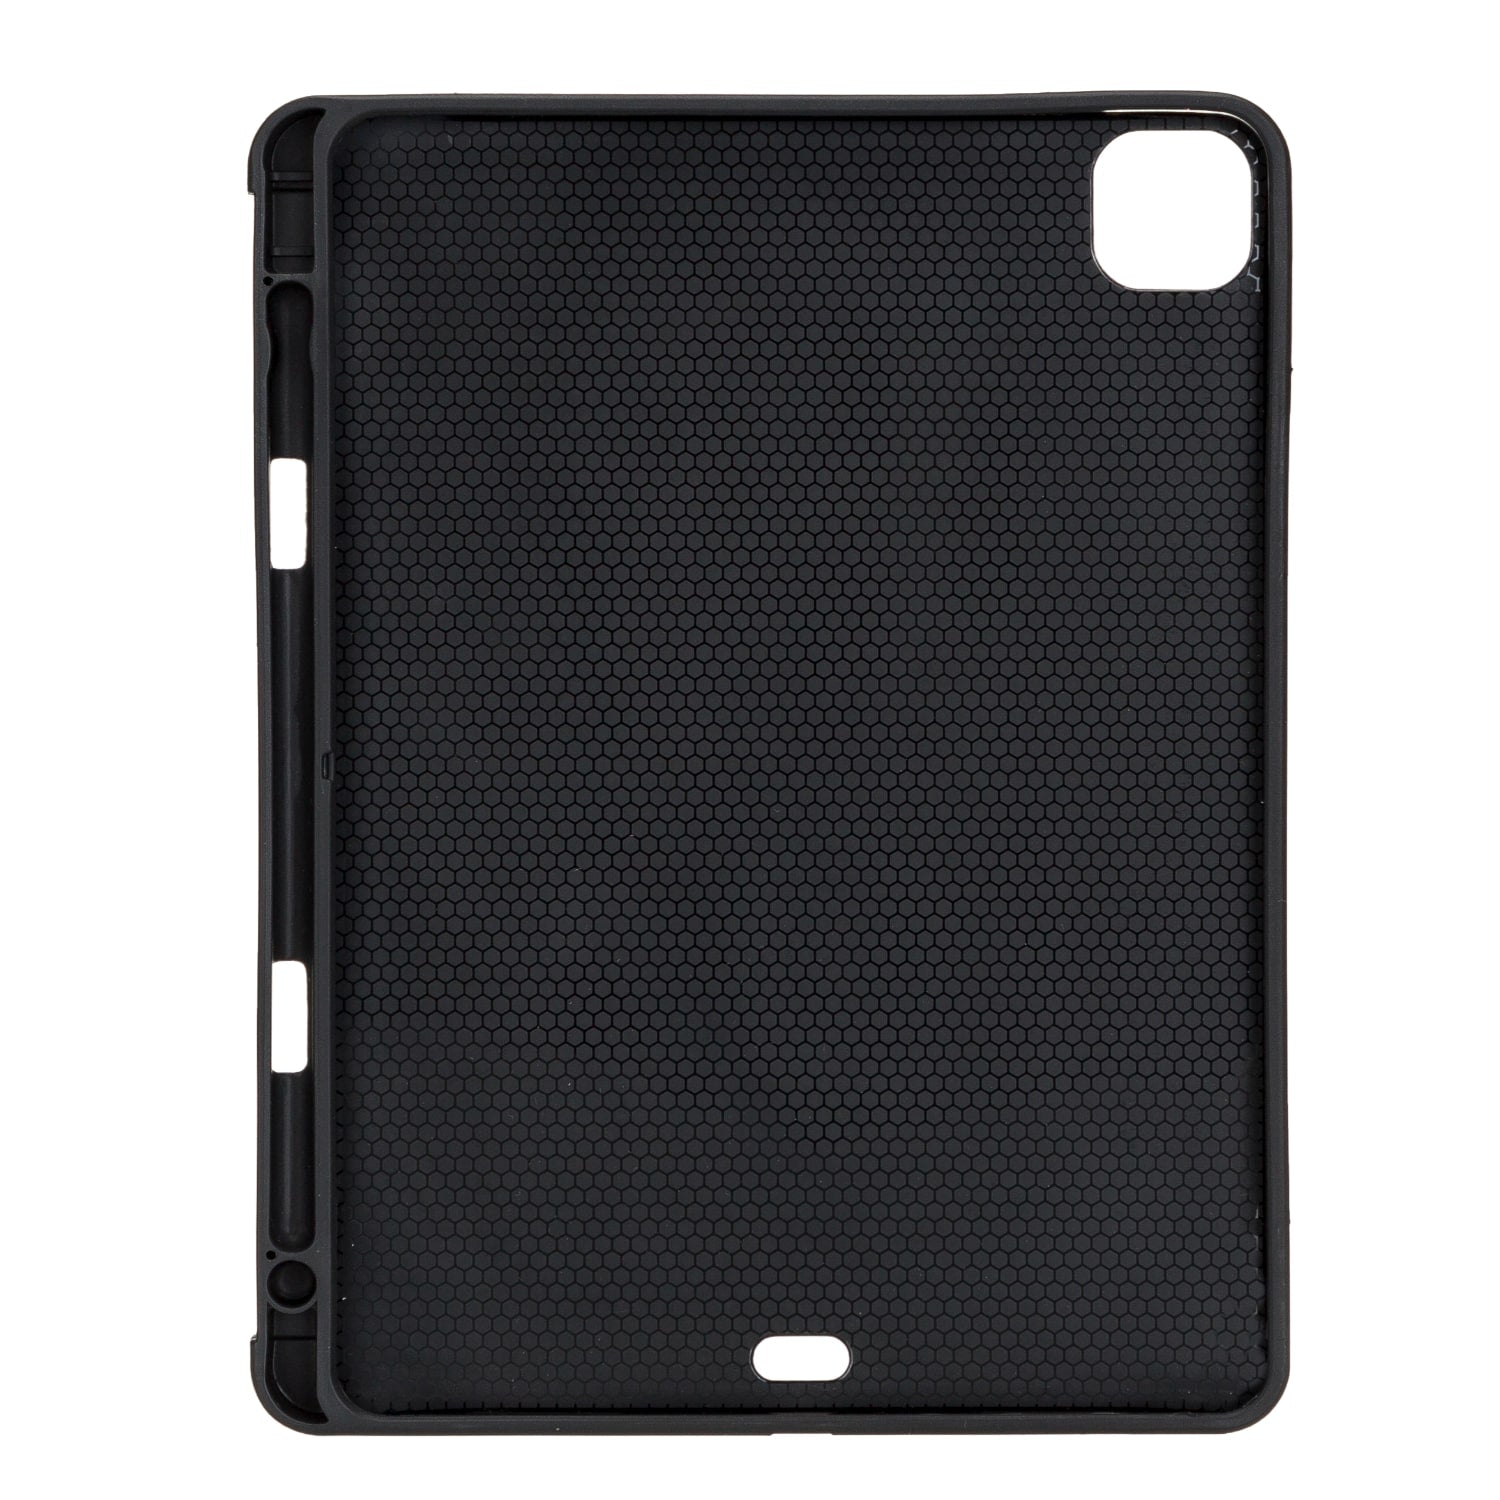 Brown Leather iPad Pro 11 Inc Smart Folio Case with Apple Pen Holder - Bomonti - 6